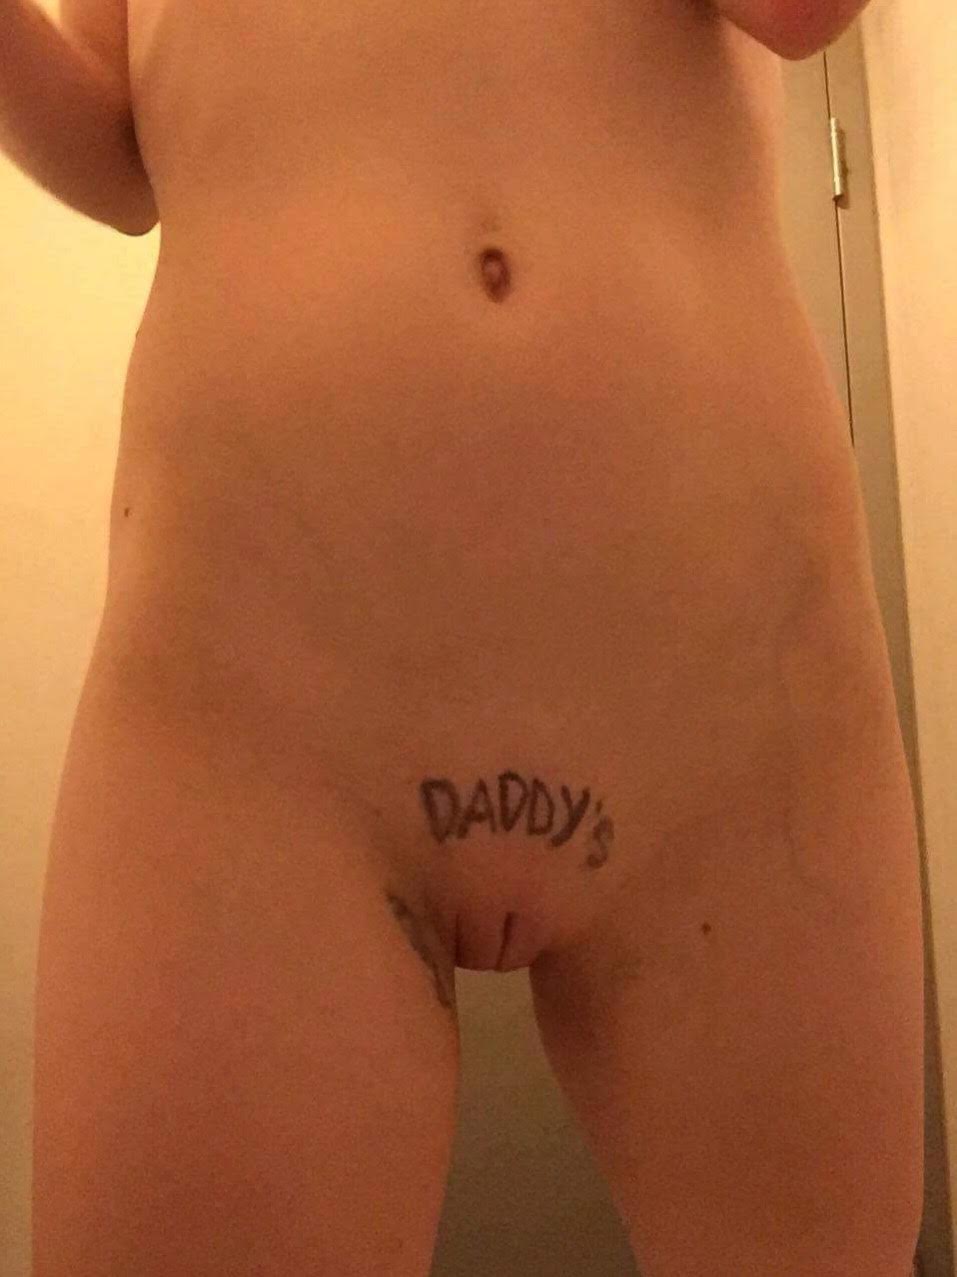 Porno daddys girl Mother Drugs